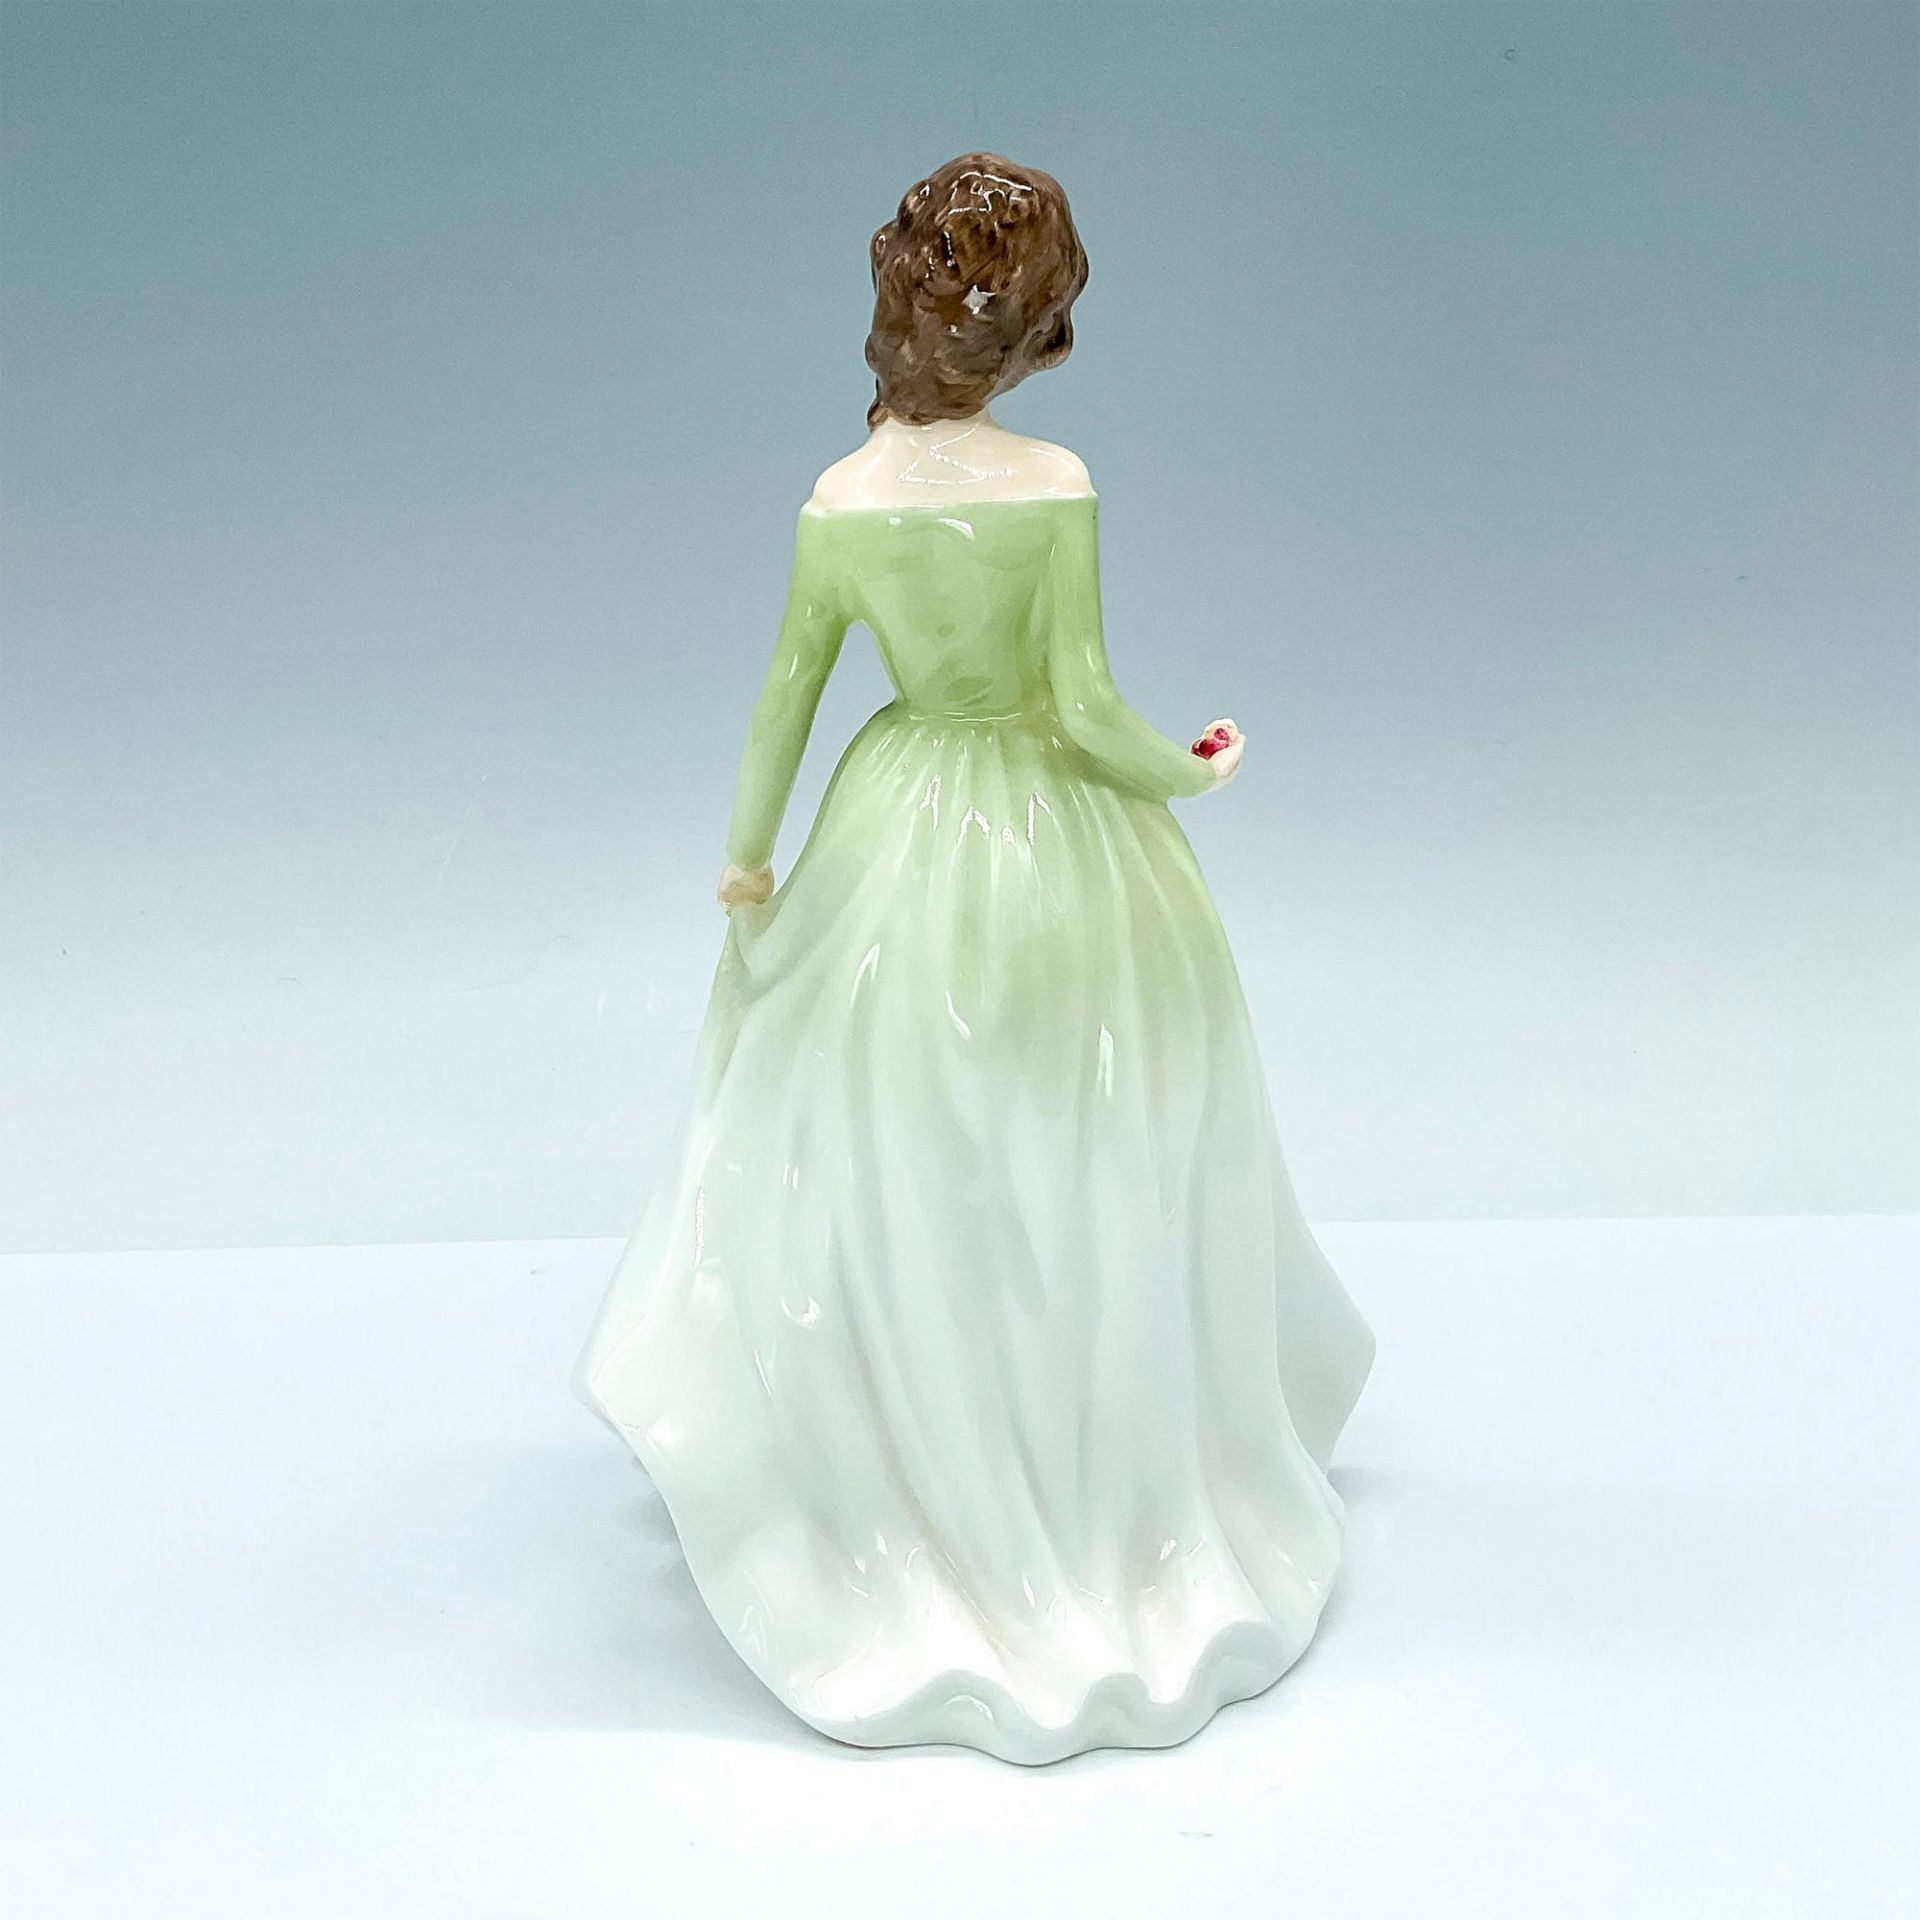 Chloe - HN3883 - Royal Doulton Figurine - Image 2 of 3